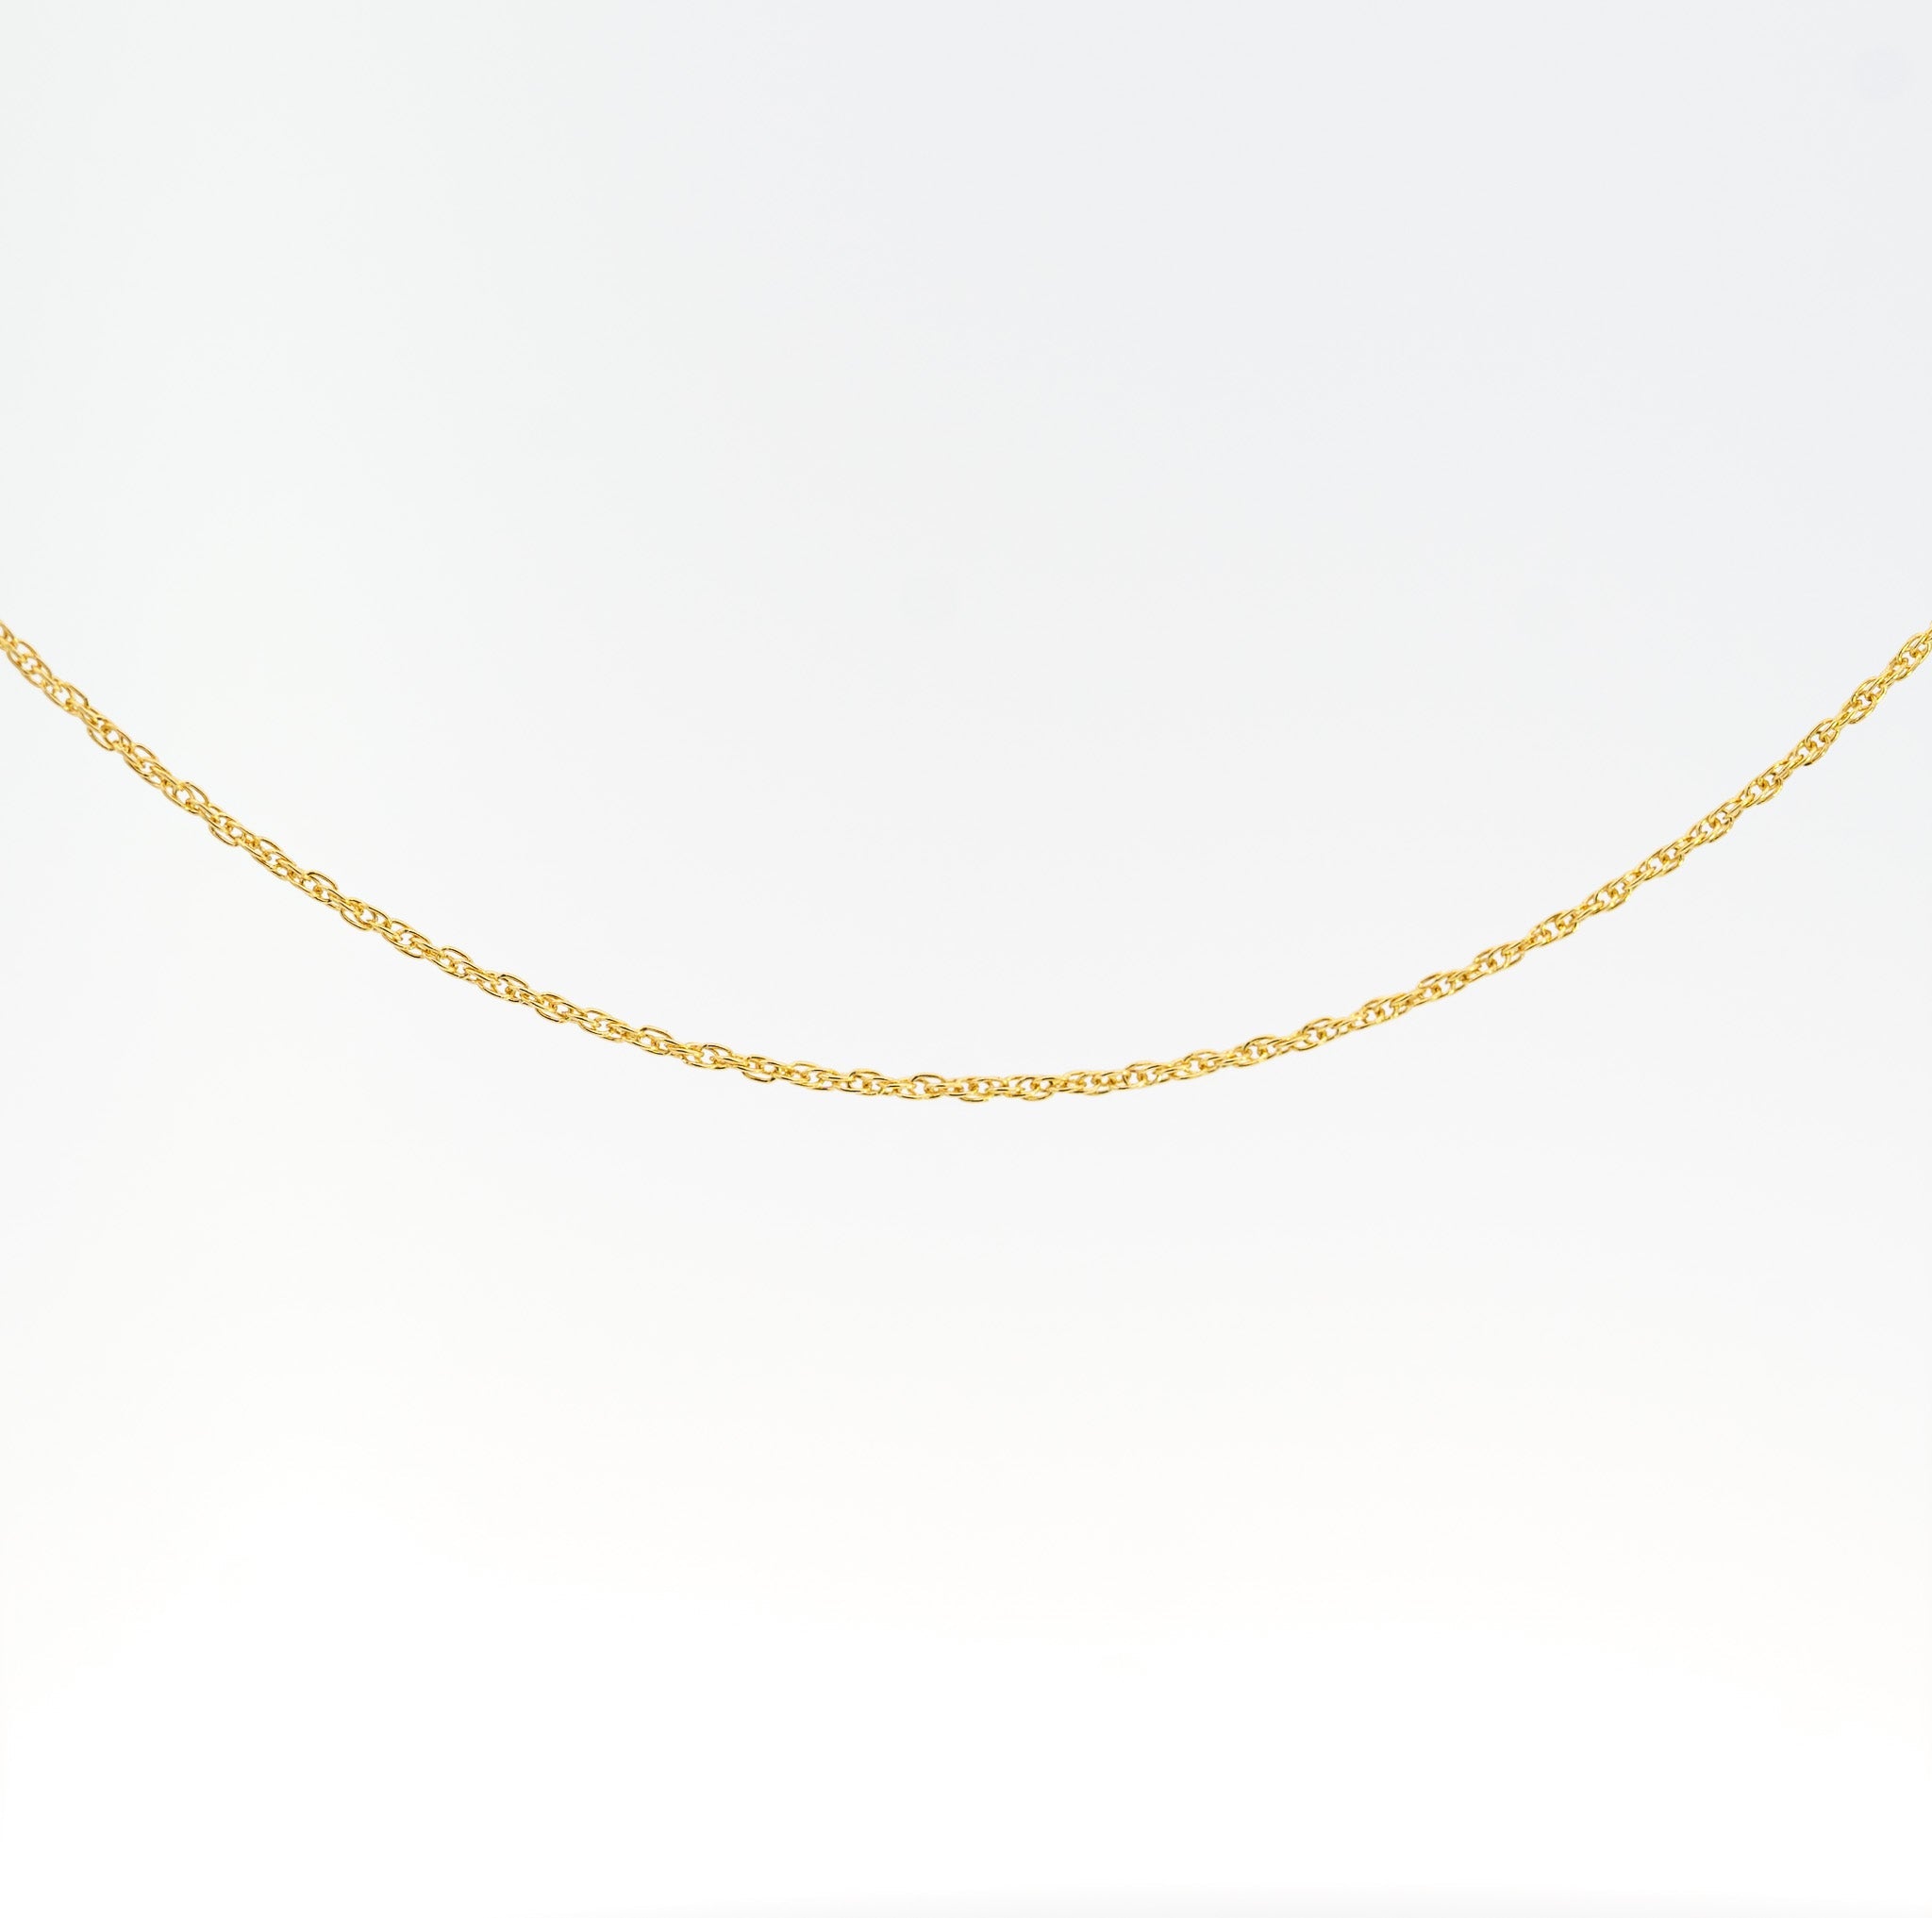 3mm Thick Rope Chain - Crislu 20 / 18kt Yellow Gold